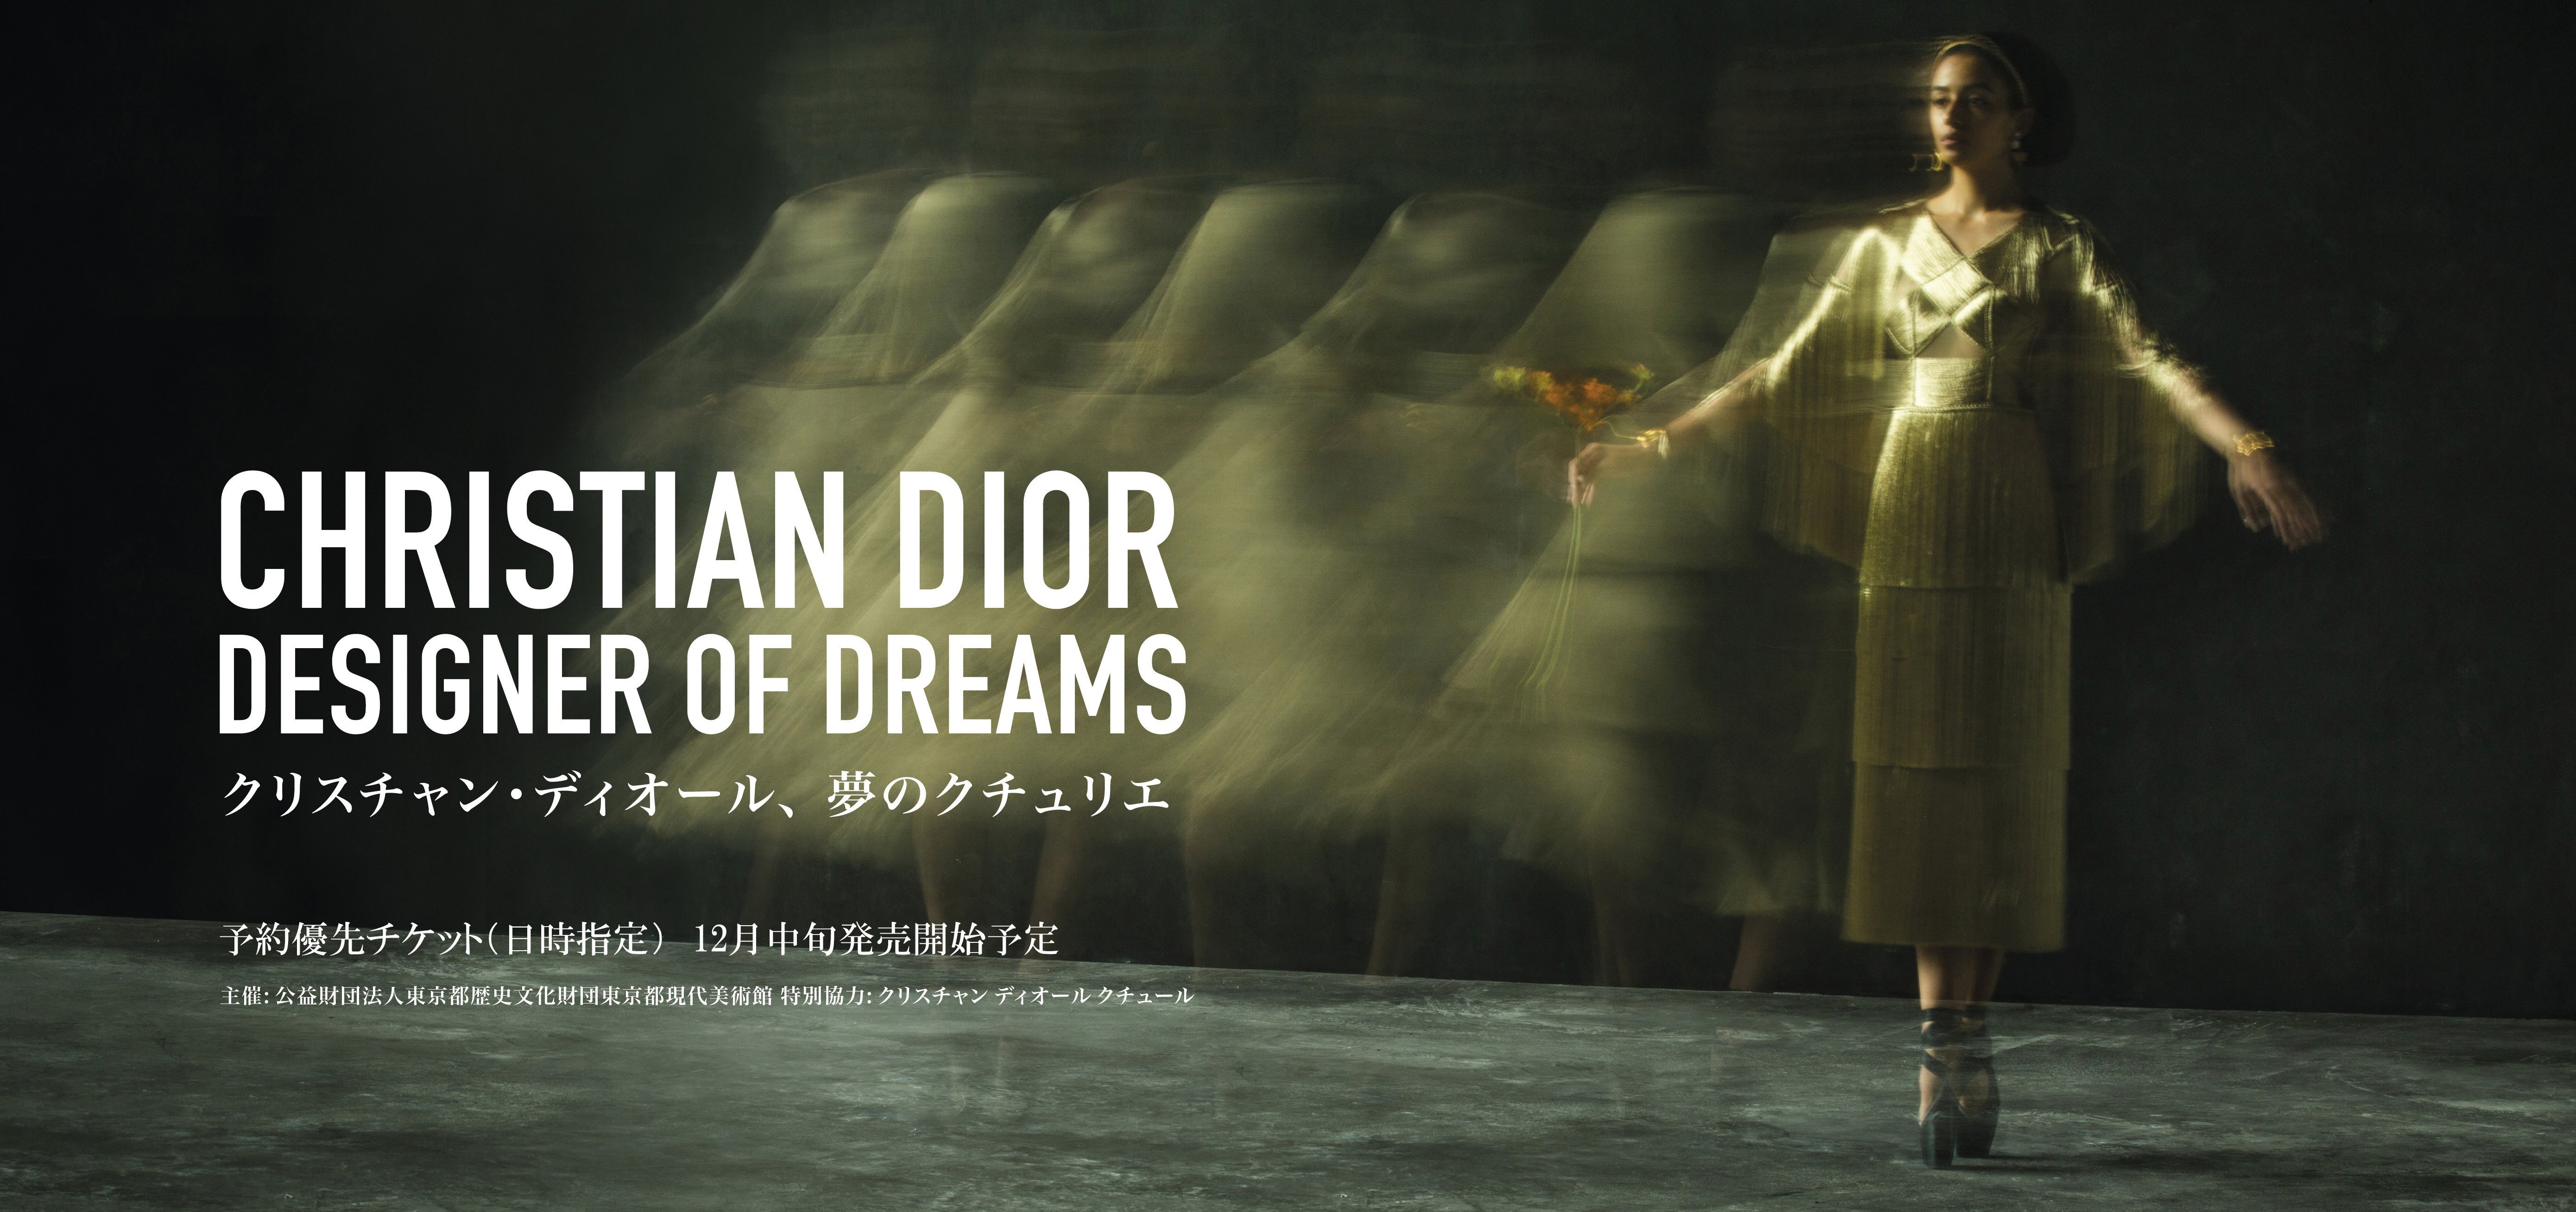 Christian Dior: Designer of Dreams ticket